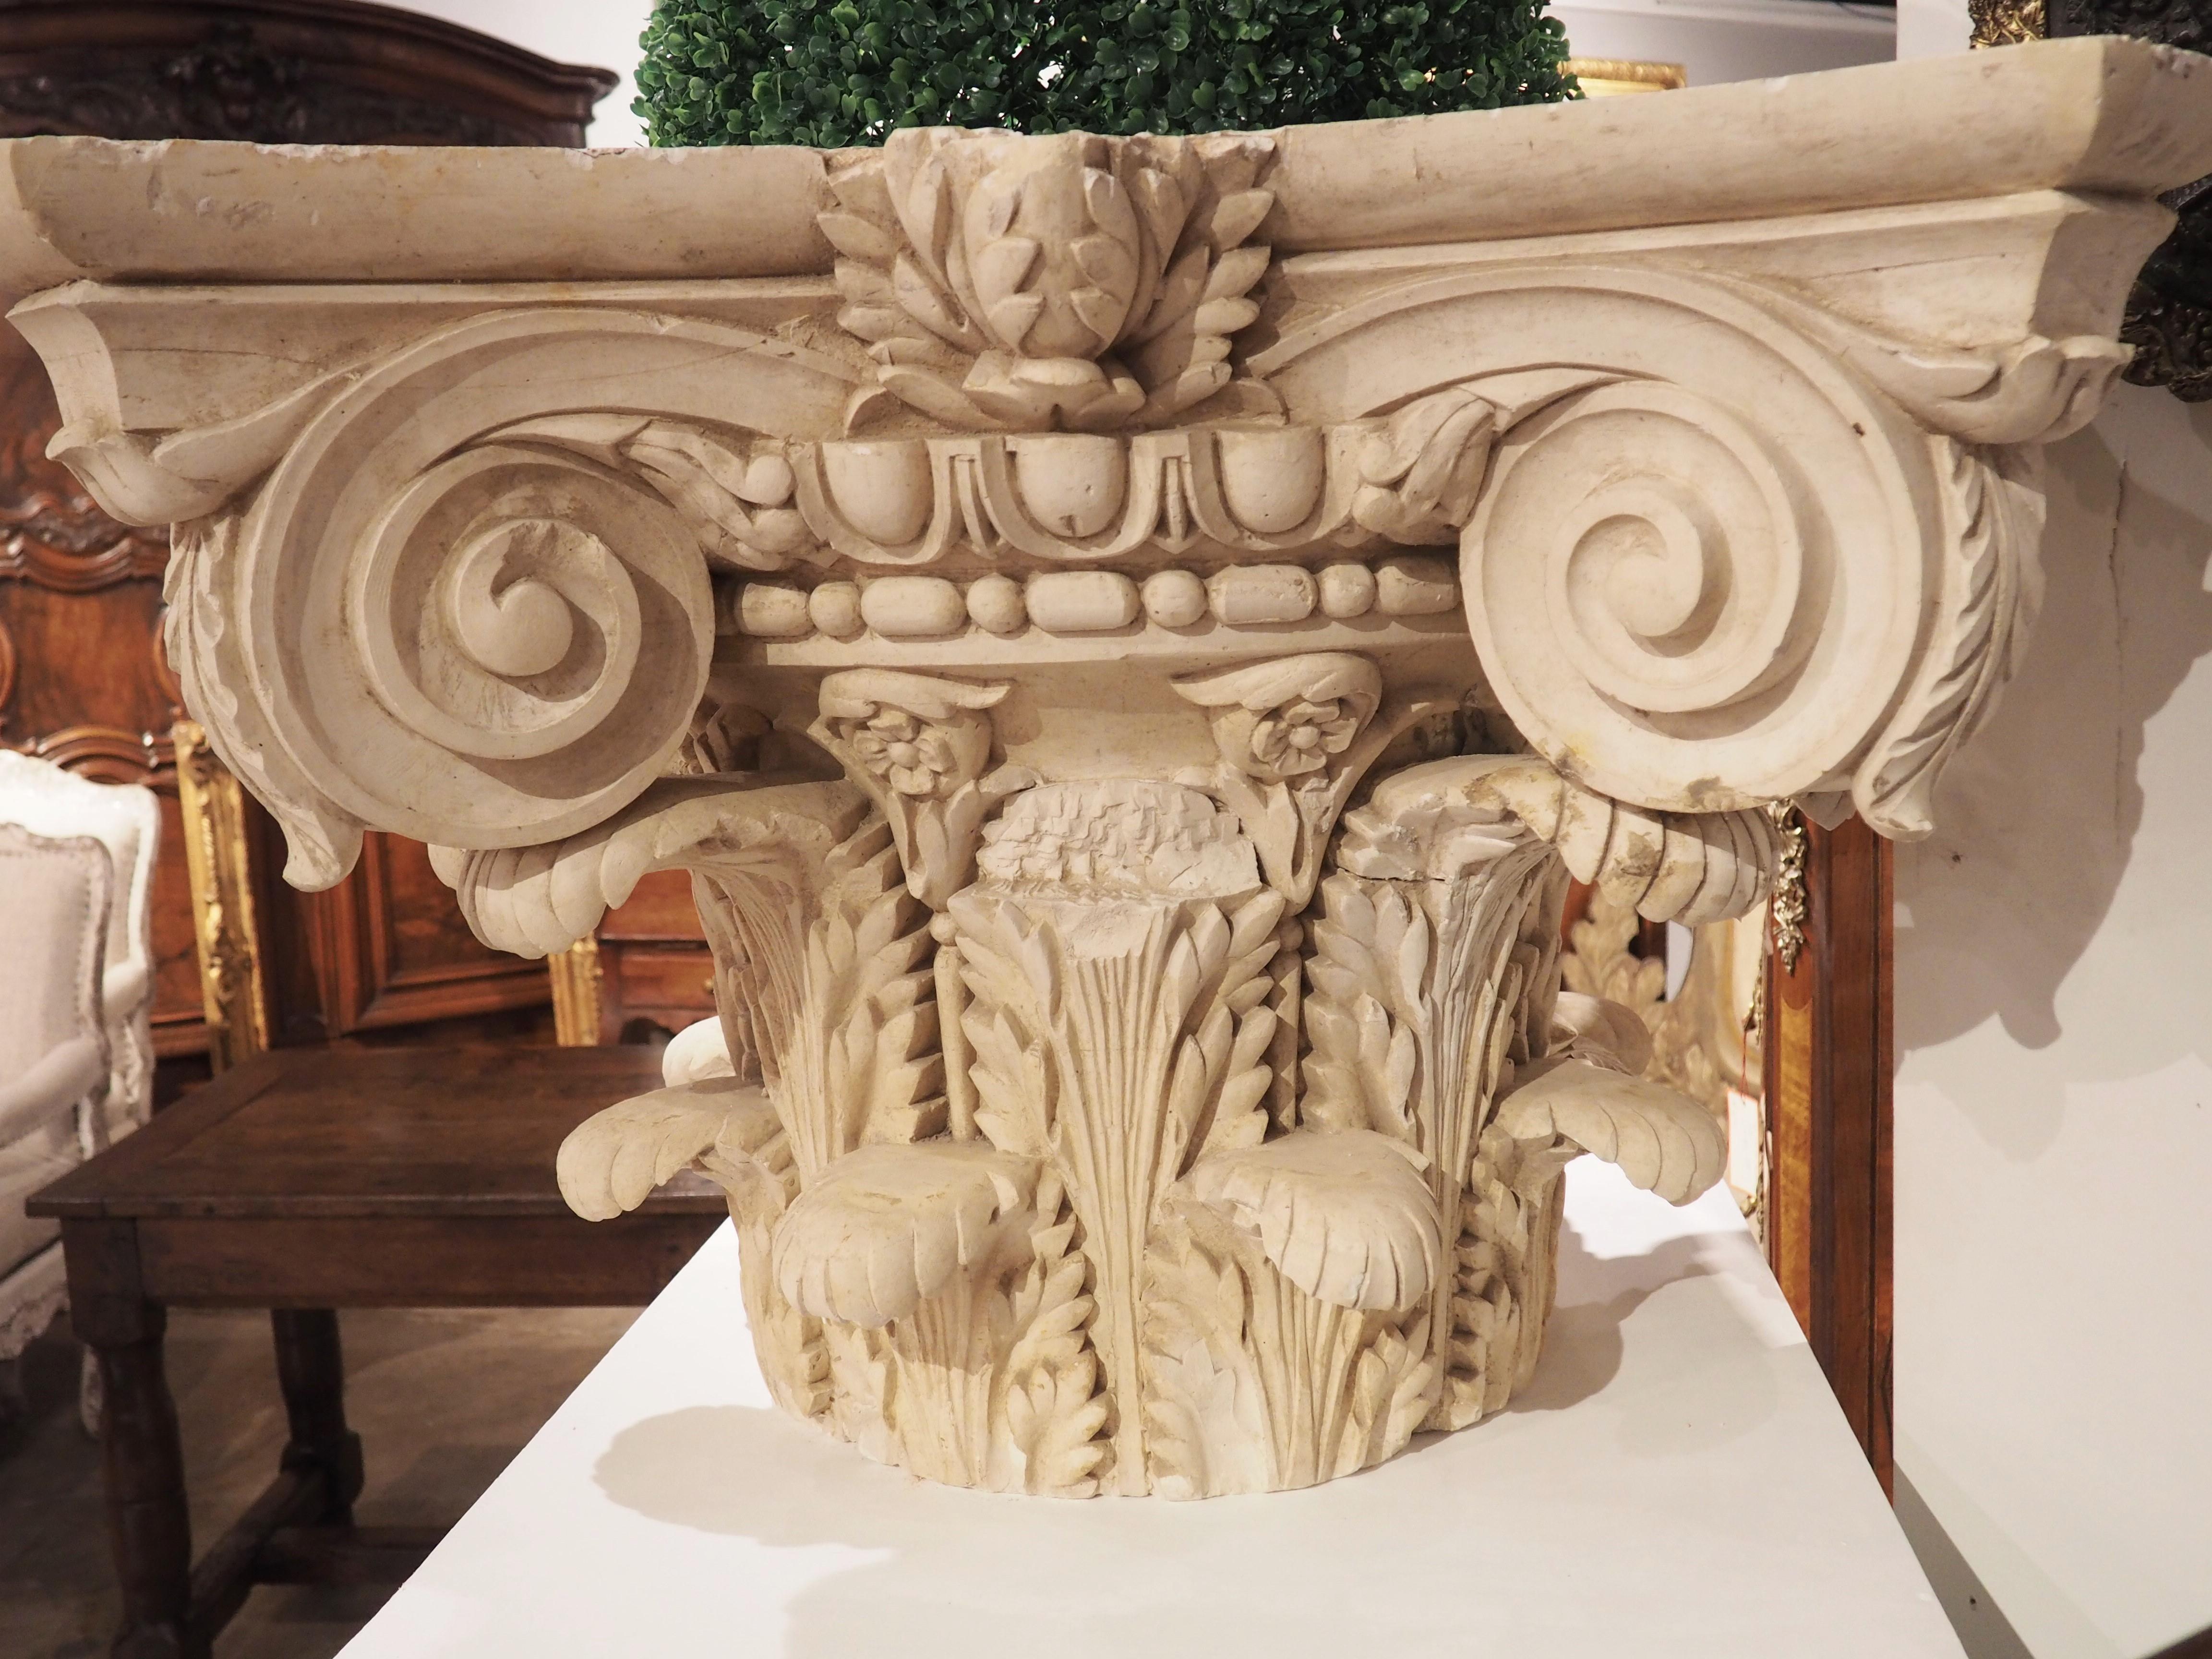 Large Plaster Composite Order Capital on Wooden Pedestal, France, Early 1900s For Sale 5